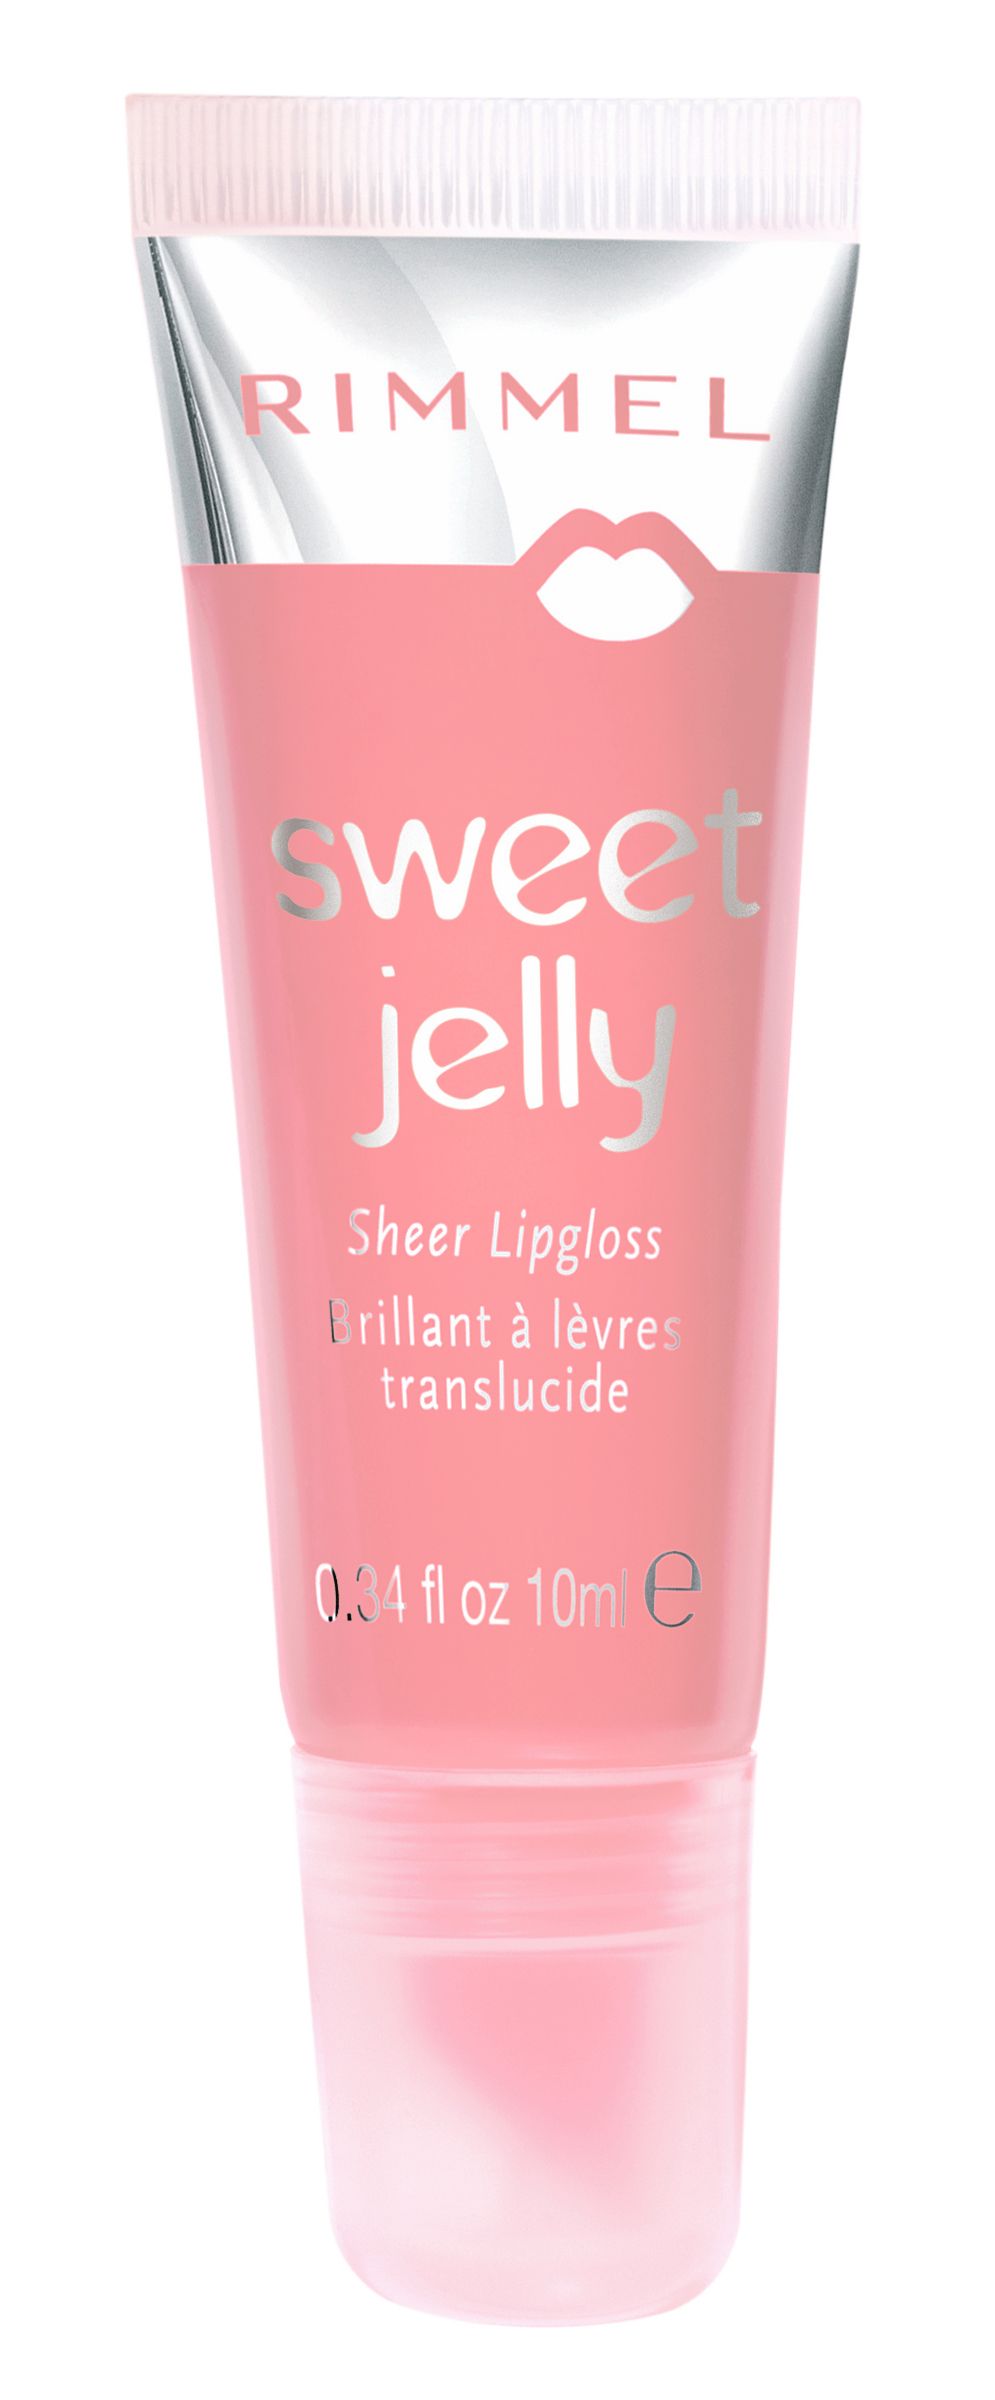 Sheer Lipgloss, Gourmet 010, 0.34 fl oz (10 ml)